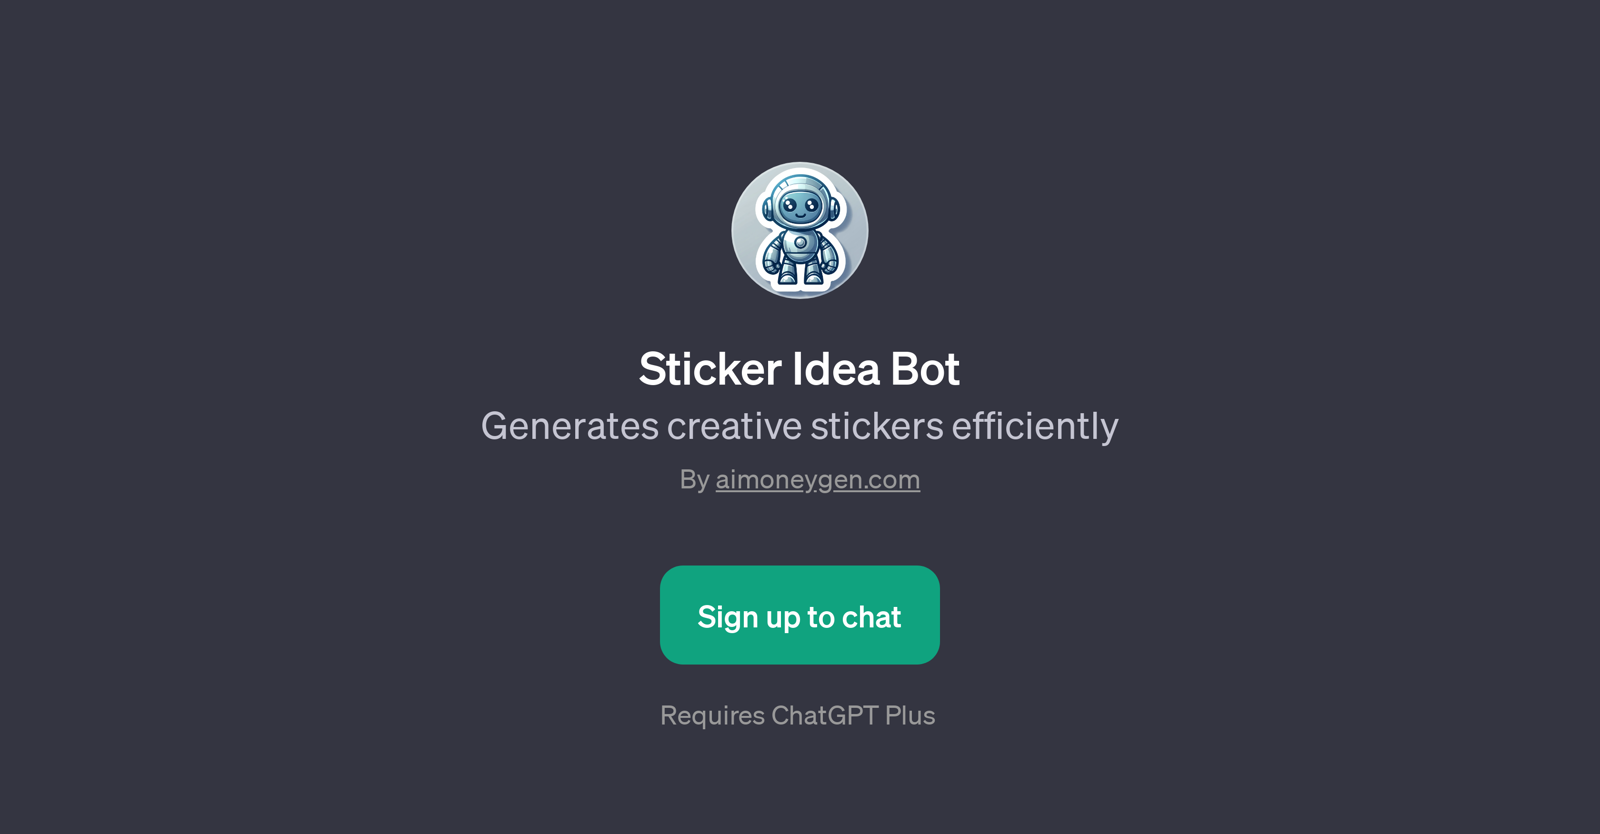 Sticker Idea Bot website